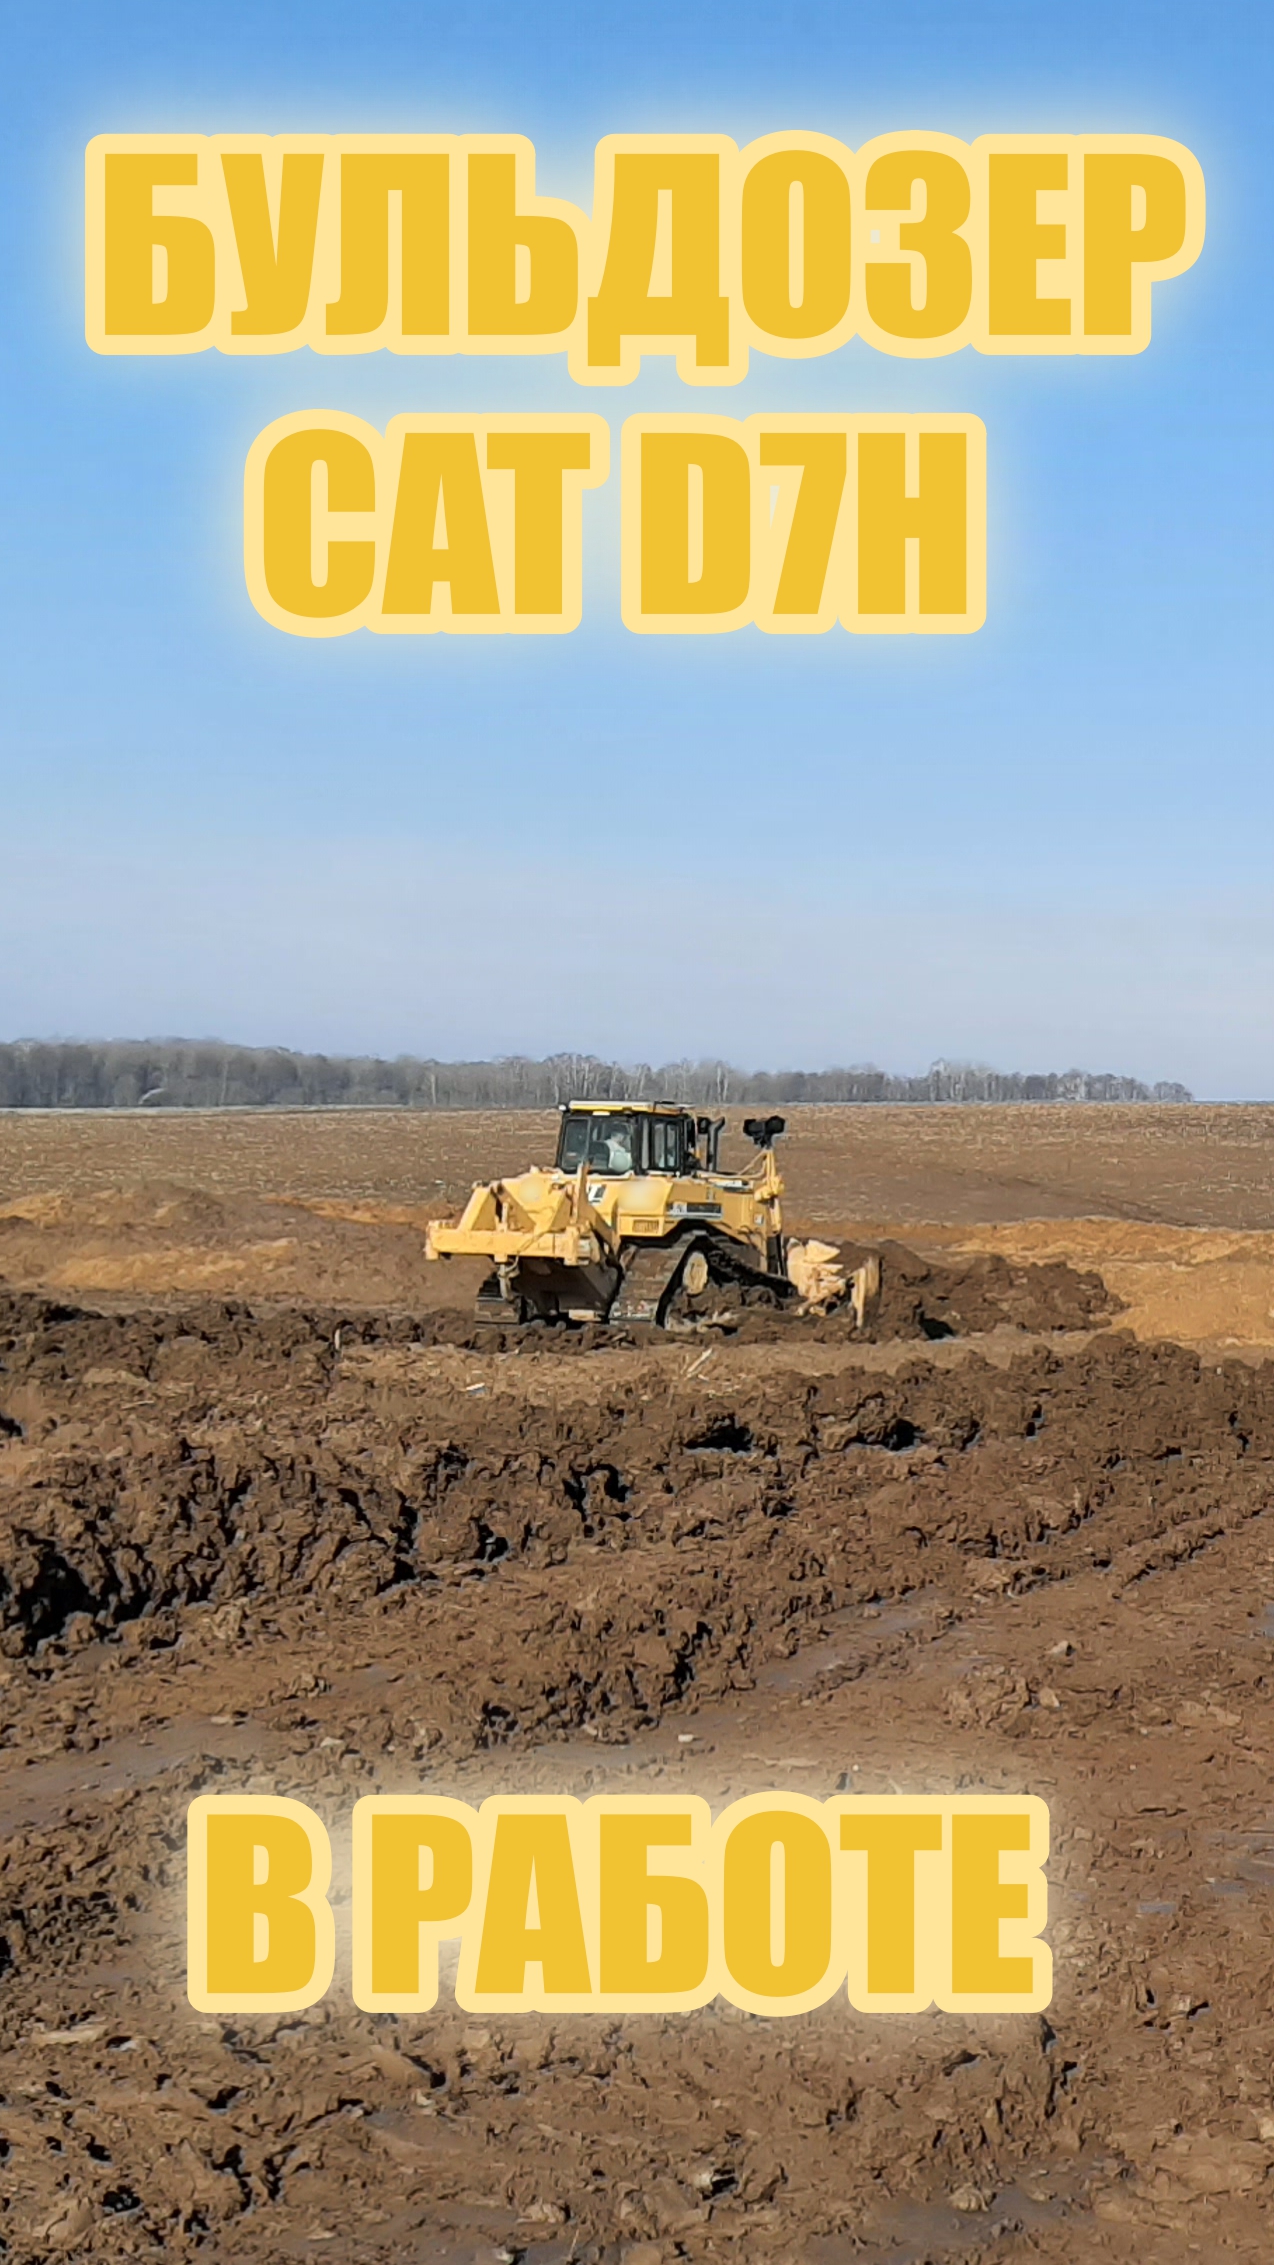 CAT D7H В РАБОТЕ! #bulldozer #caterpillar #тяжелаятехника #shorts #работа #строительство